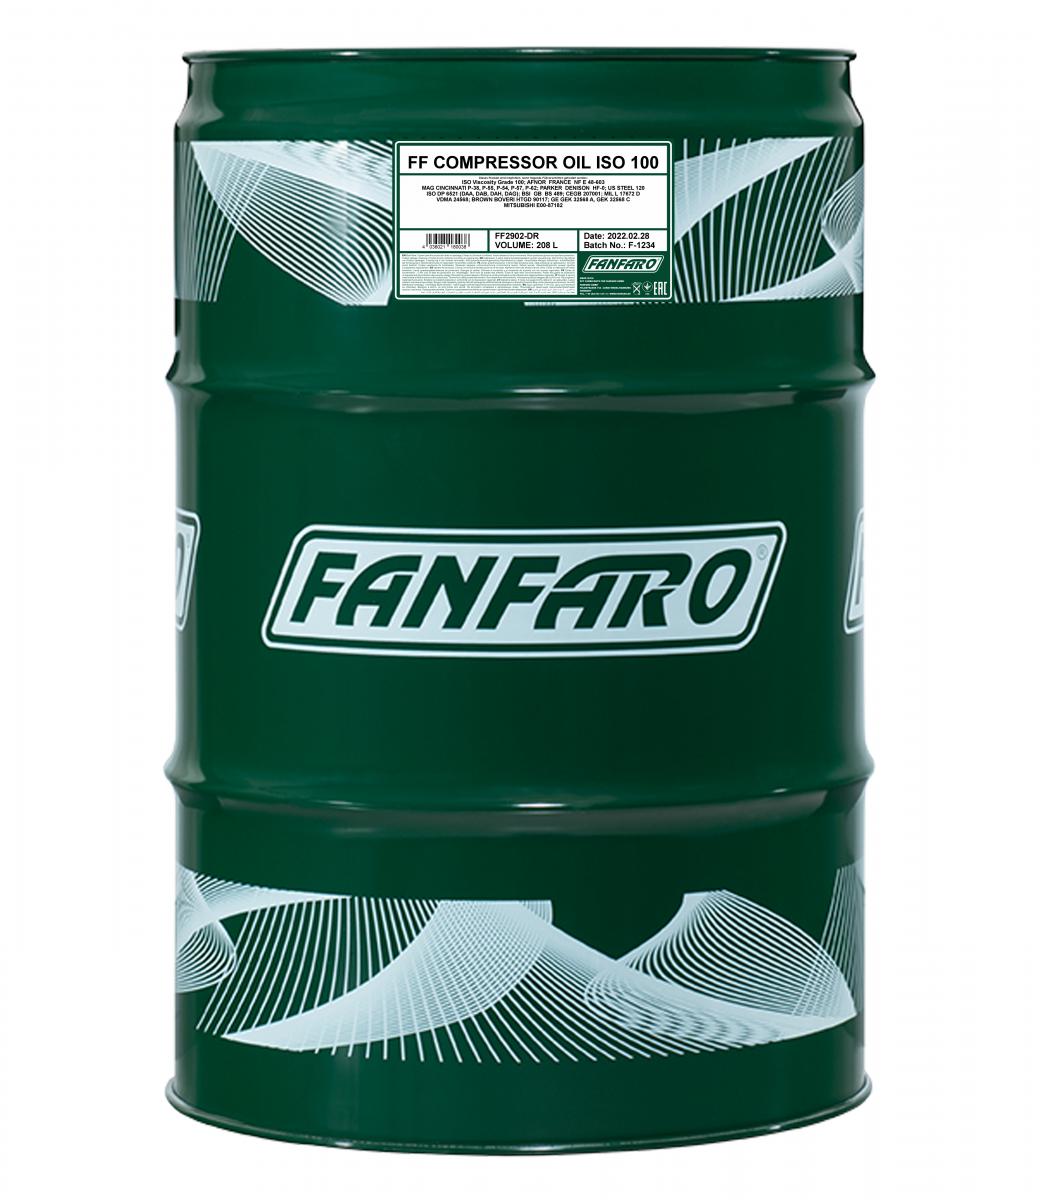 FANFARO COMRESSOR OIL ISO 100